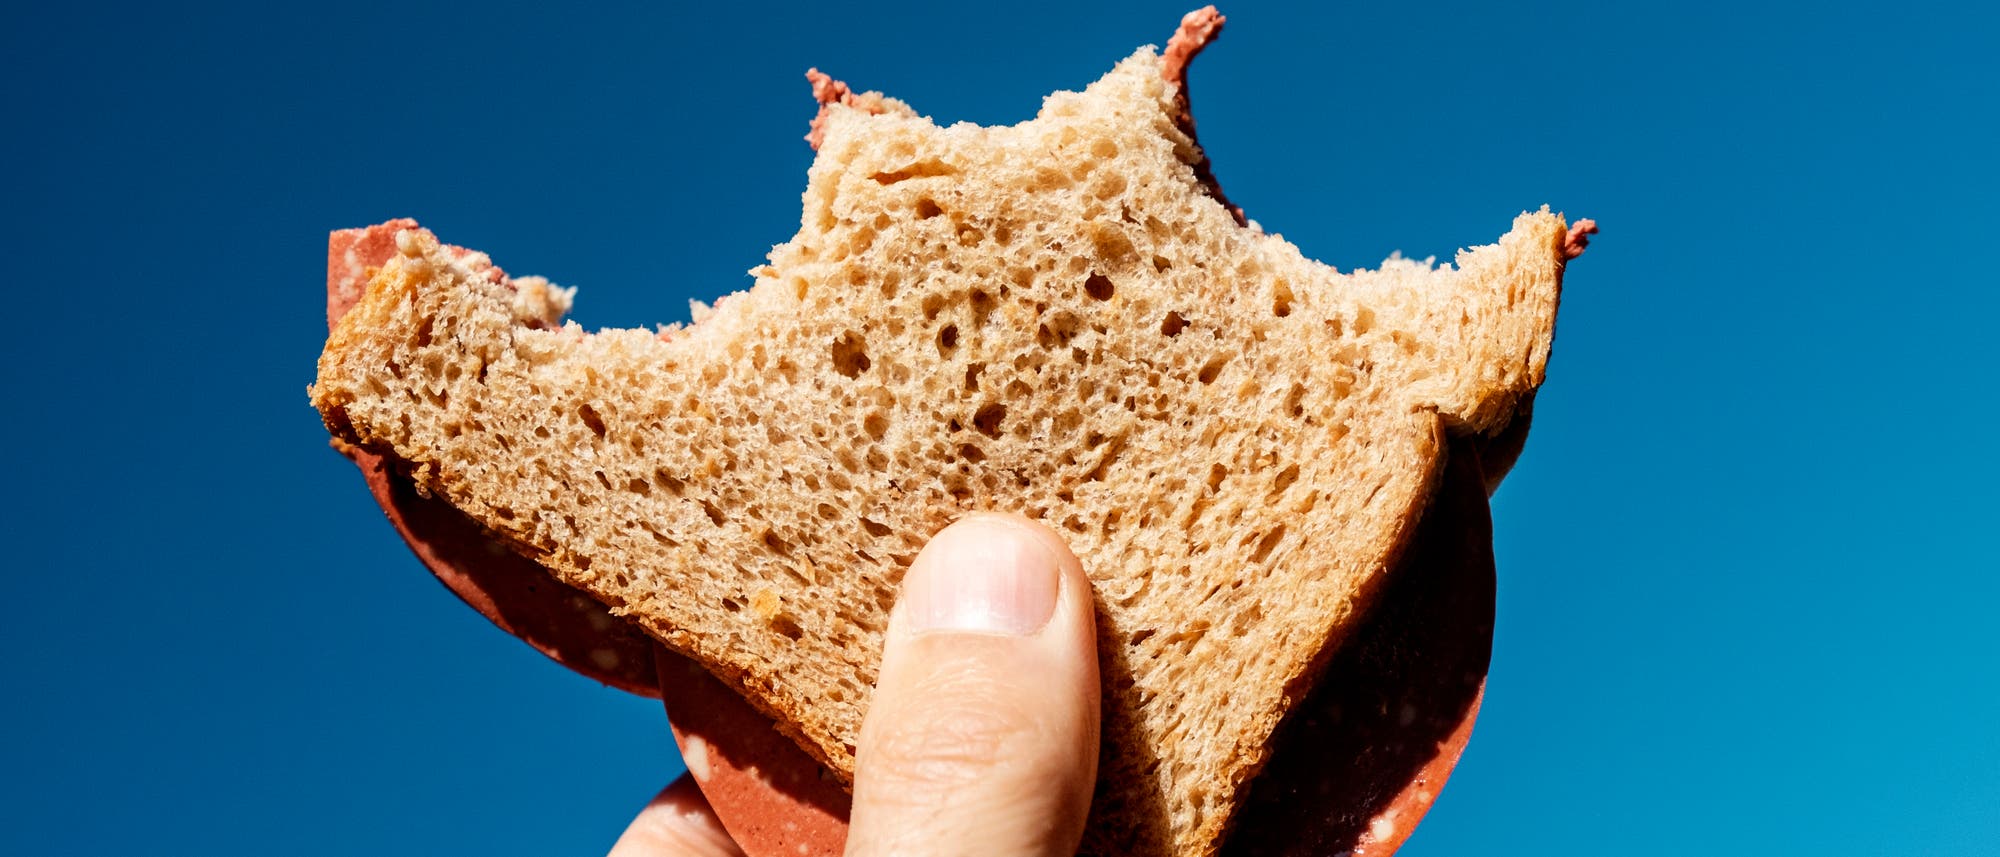 Veganer Aufschnitt auf angebissenem Brot